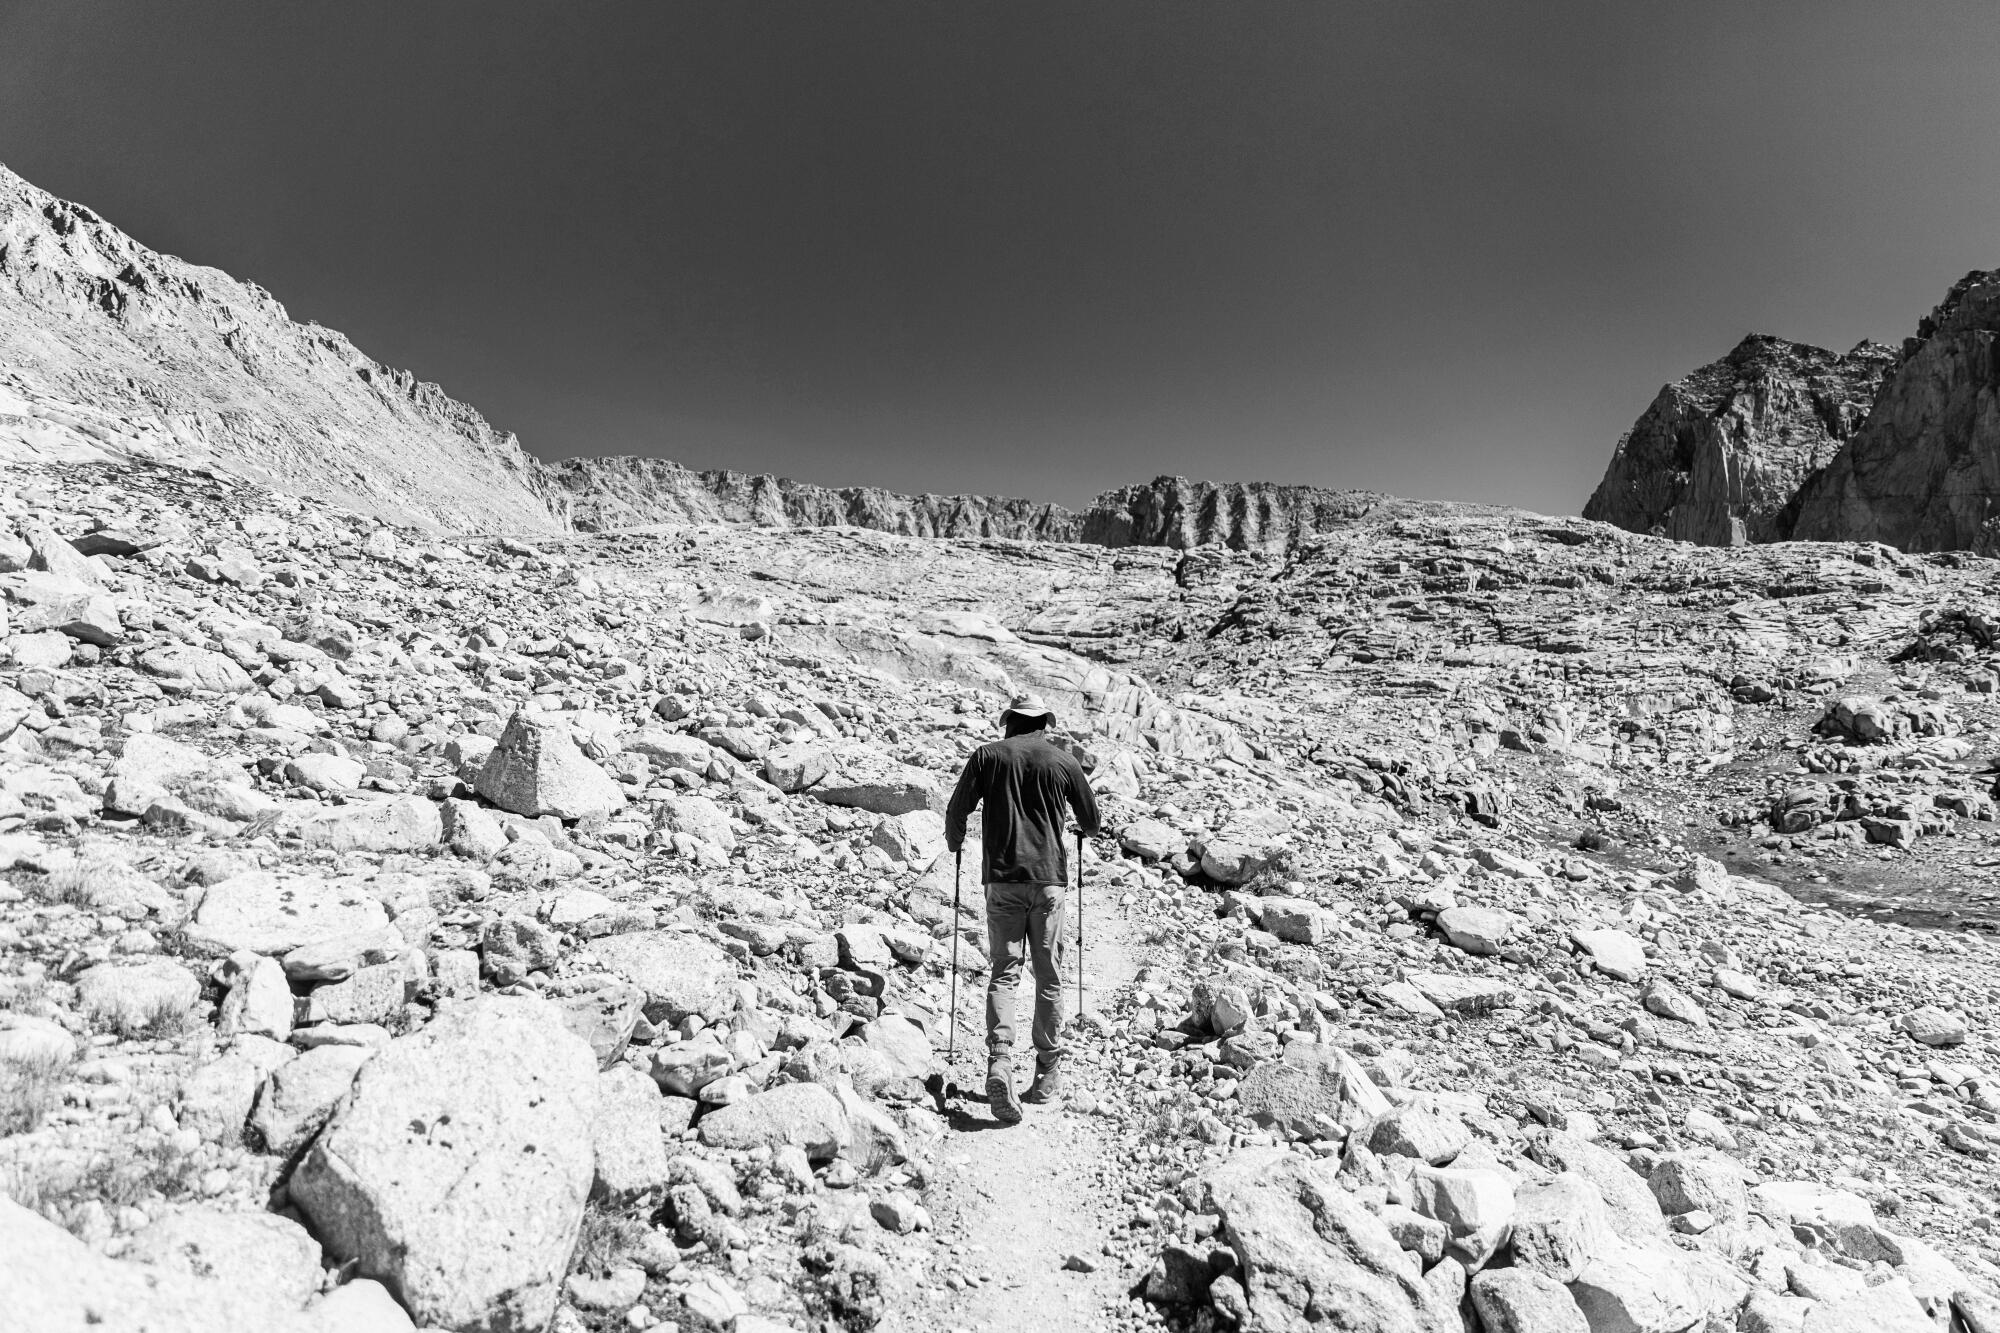 A man uses poles to walk through rocks up a mountain.